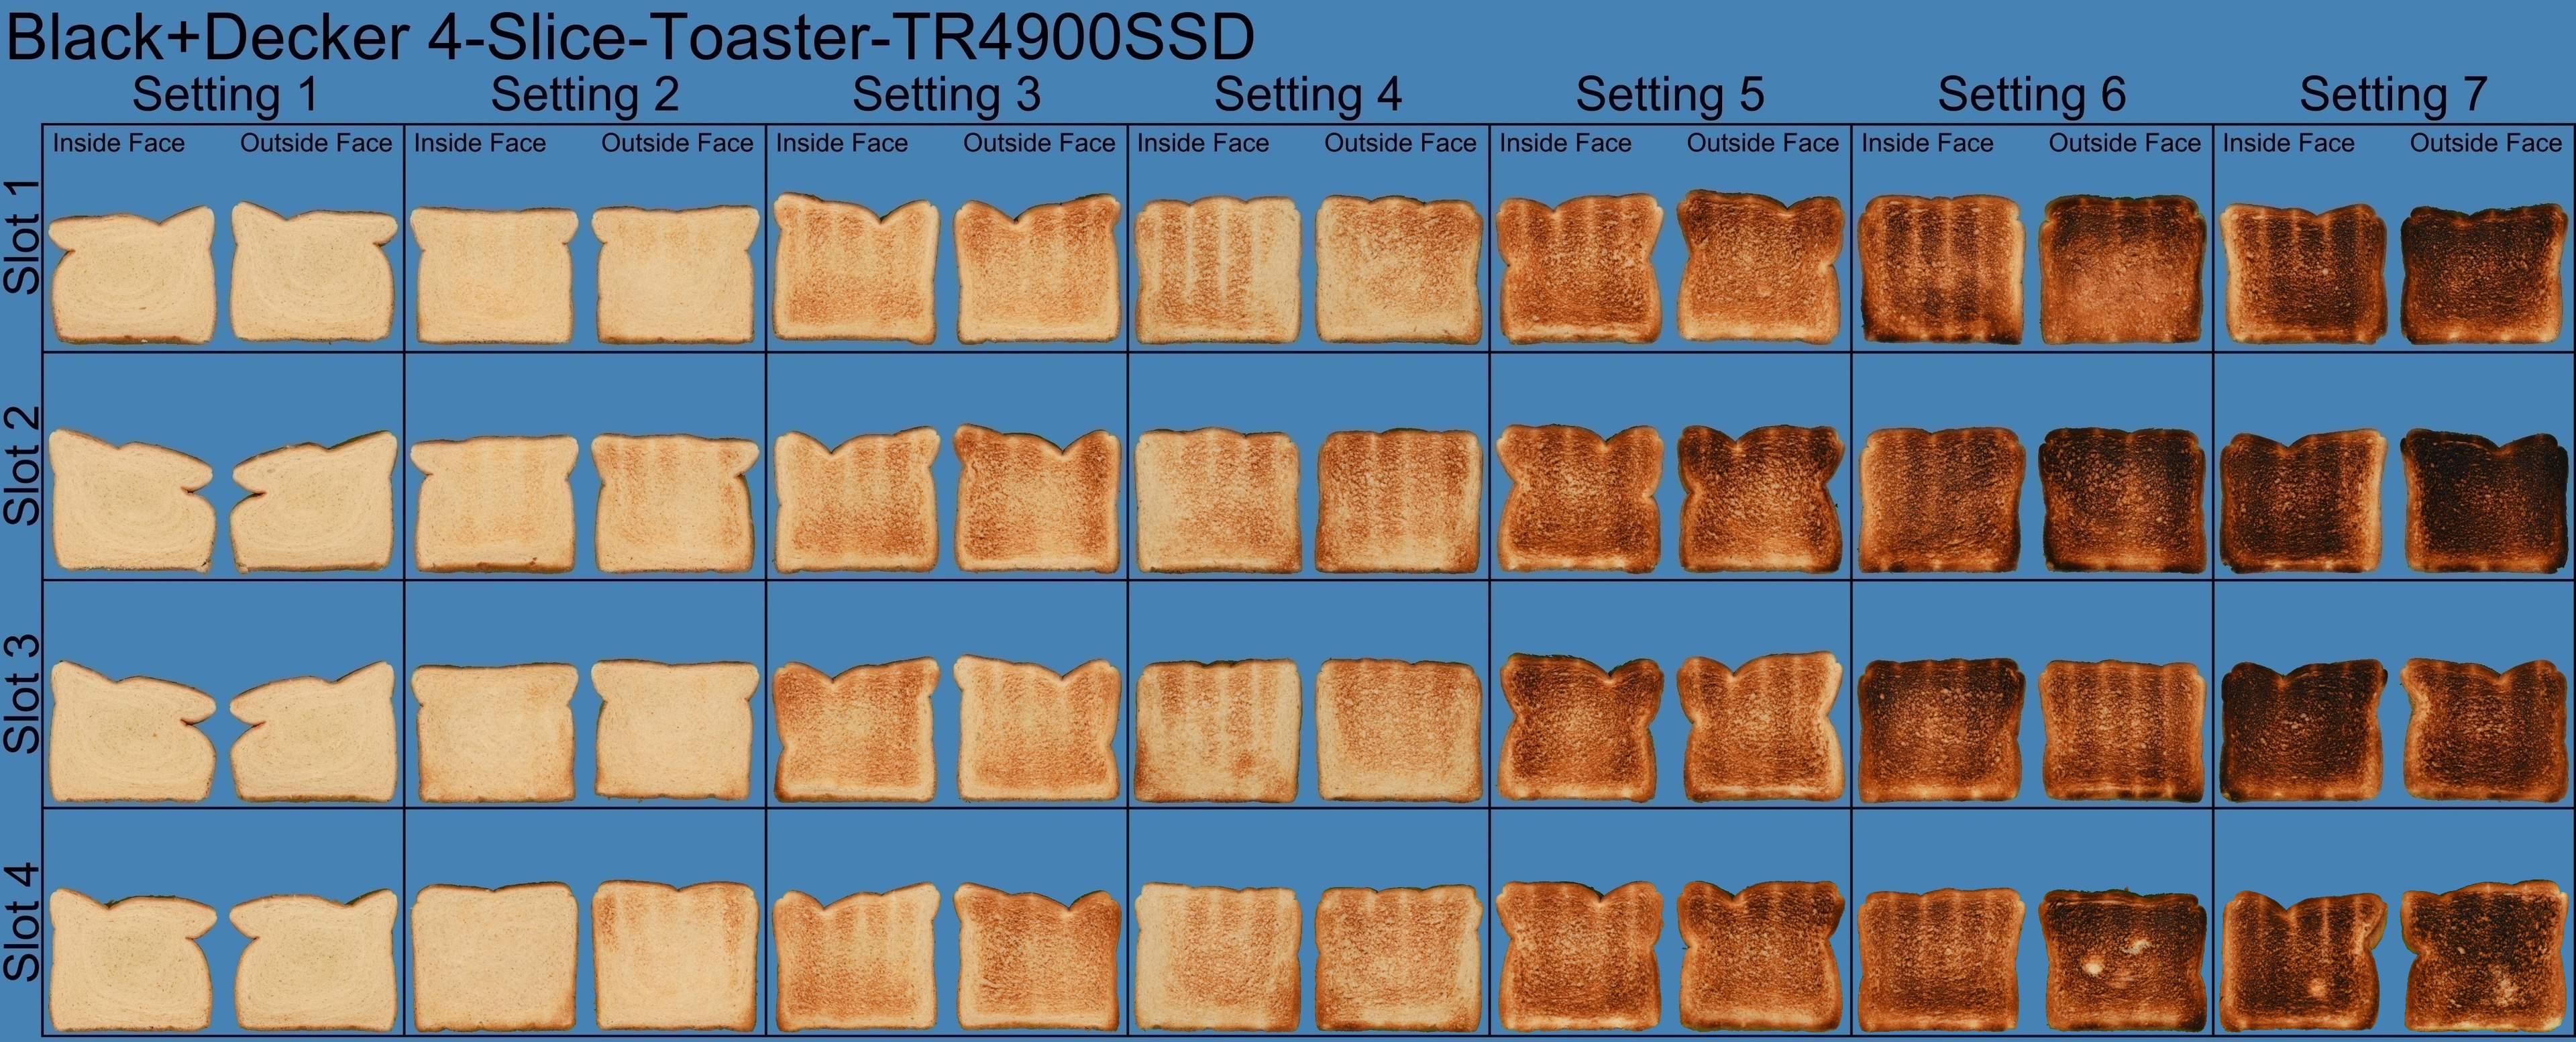 https://www.rtings.com/assets/products/6bTaTeB8/black-decker-4-slice-toaster-tr4900ssd/full-range-montage-large.jpg